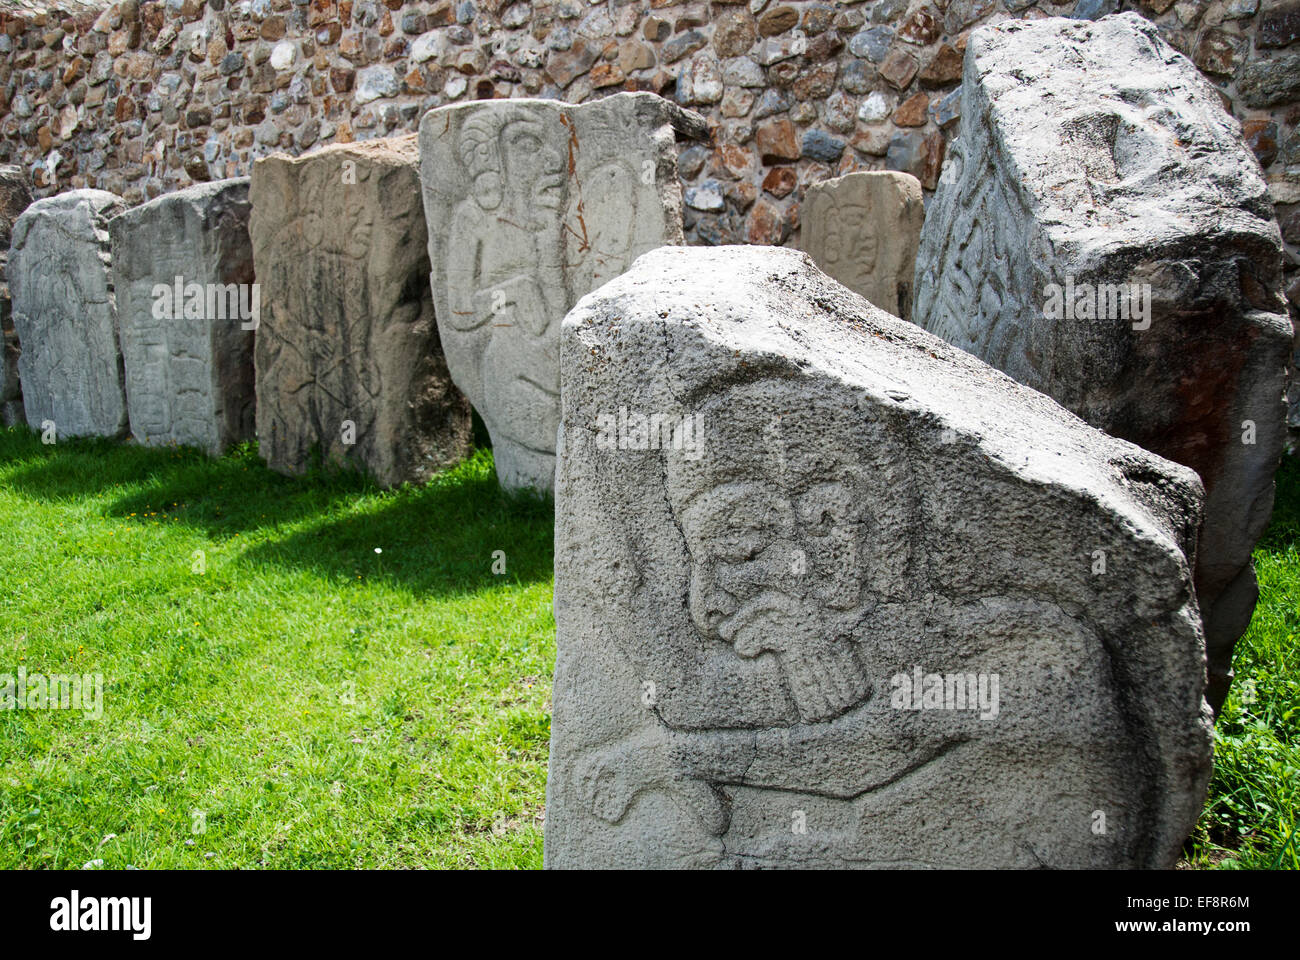 Mexico, Oaxaca, Santa Cruz Xoxocotlan, Monte Alban, Stone slabs with carvings exhibited on grass Stock Photo